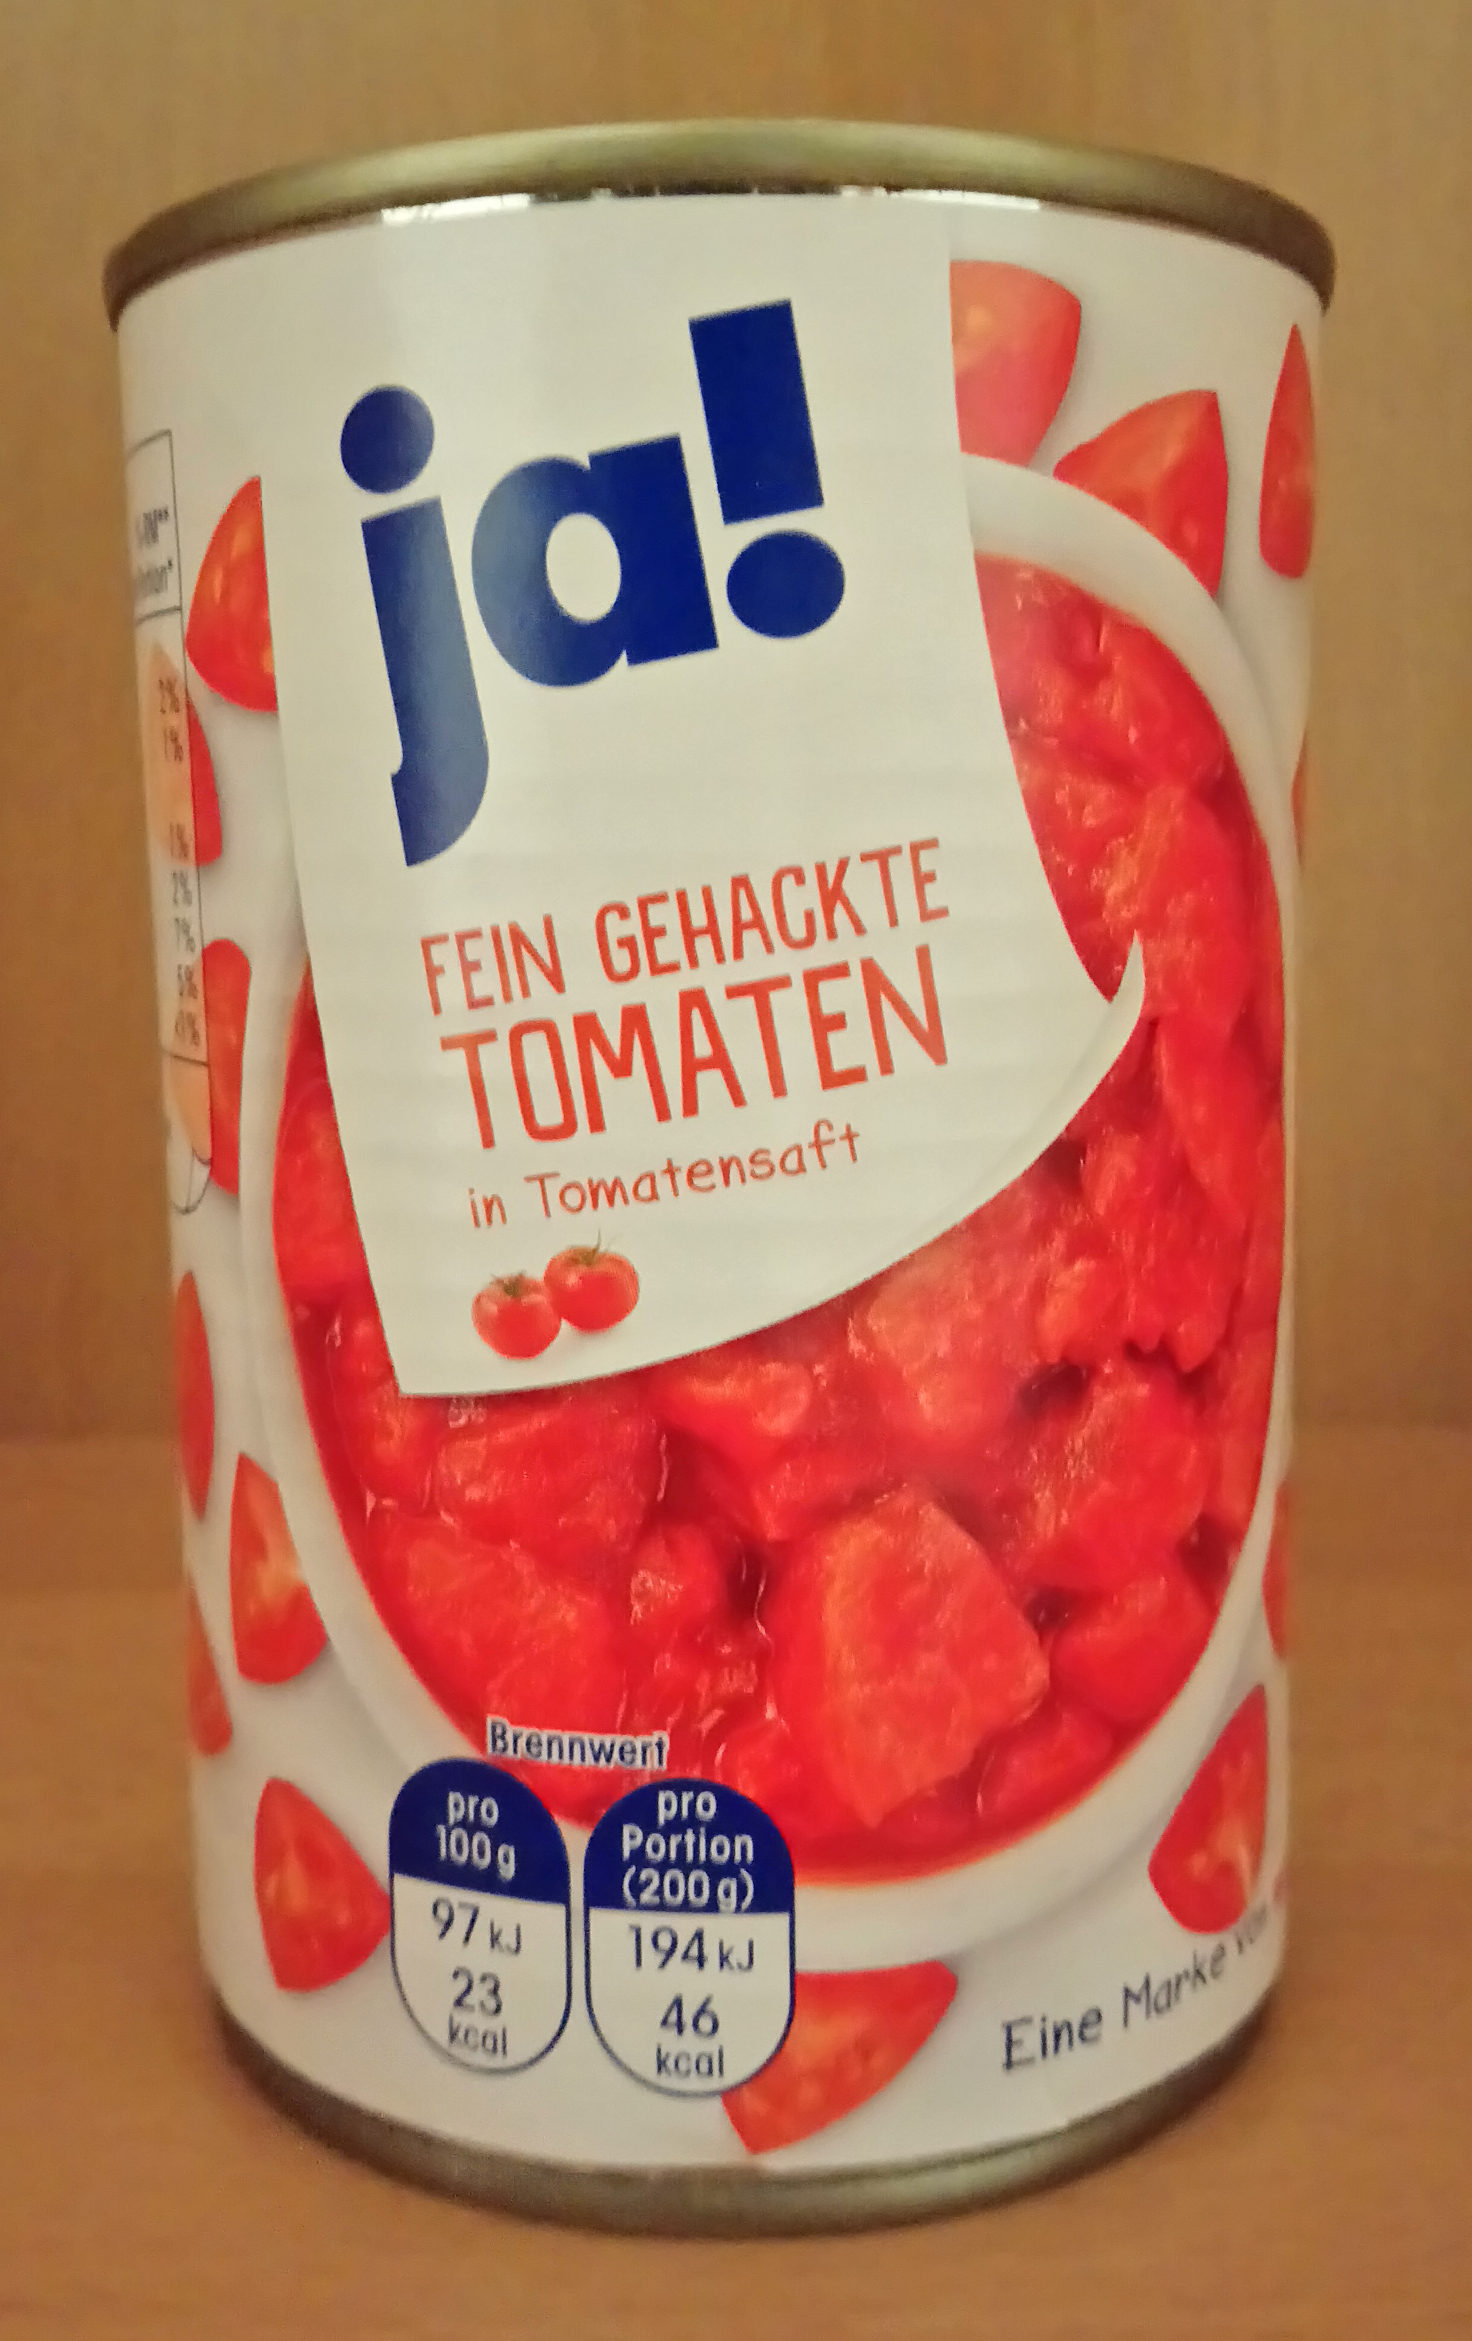 Fein gehackte Tomaten in Tomatensaft - Produkt